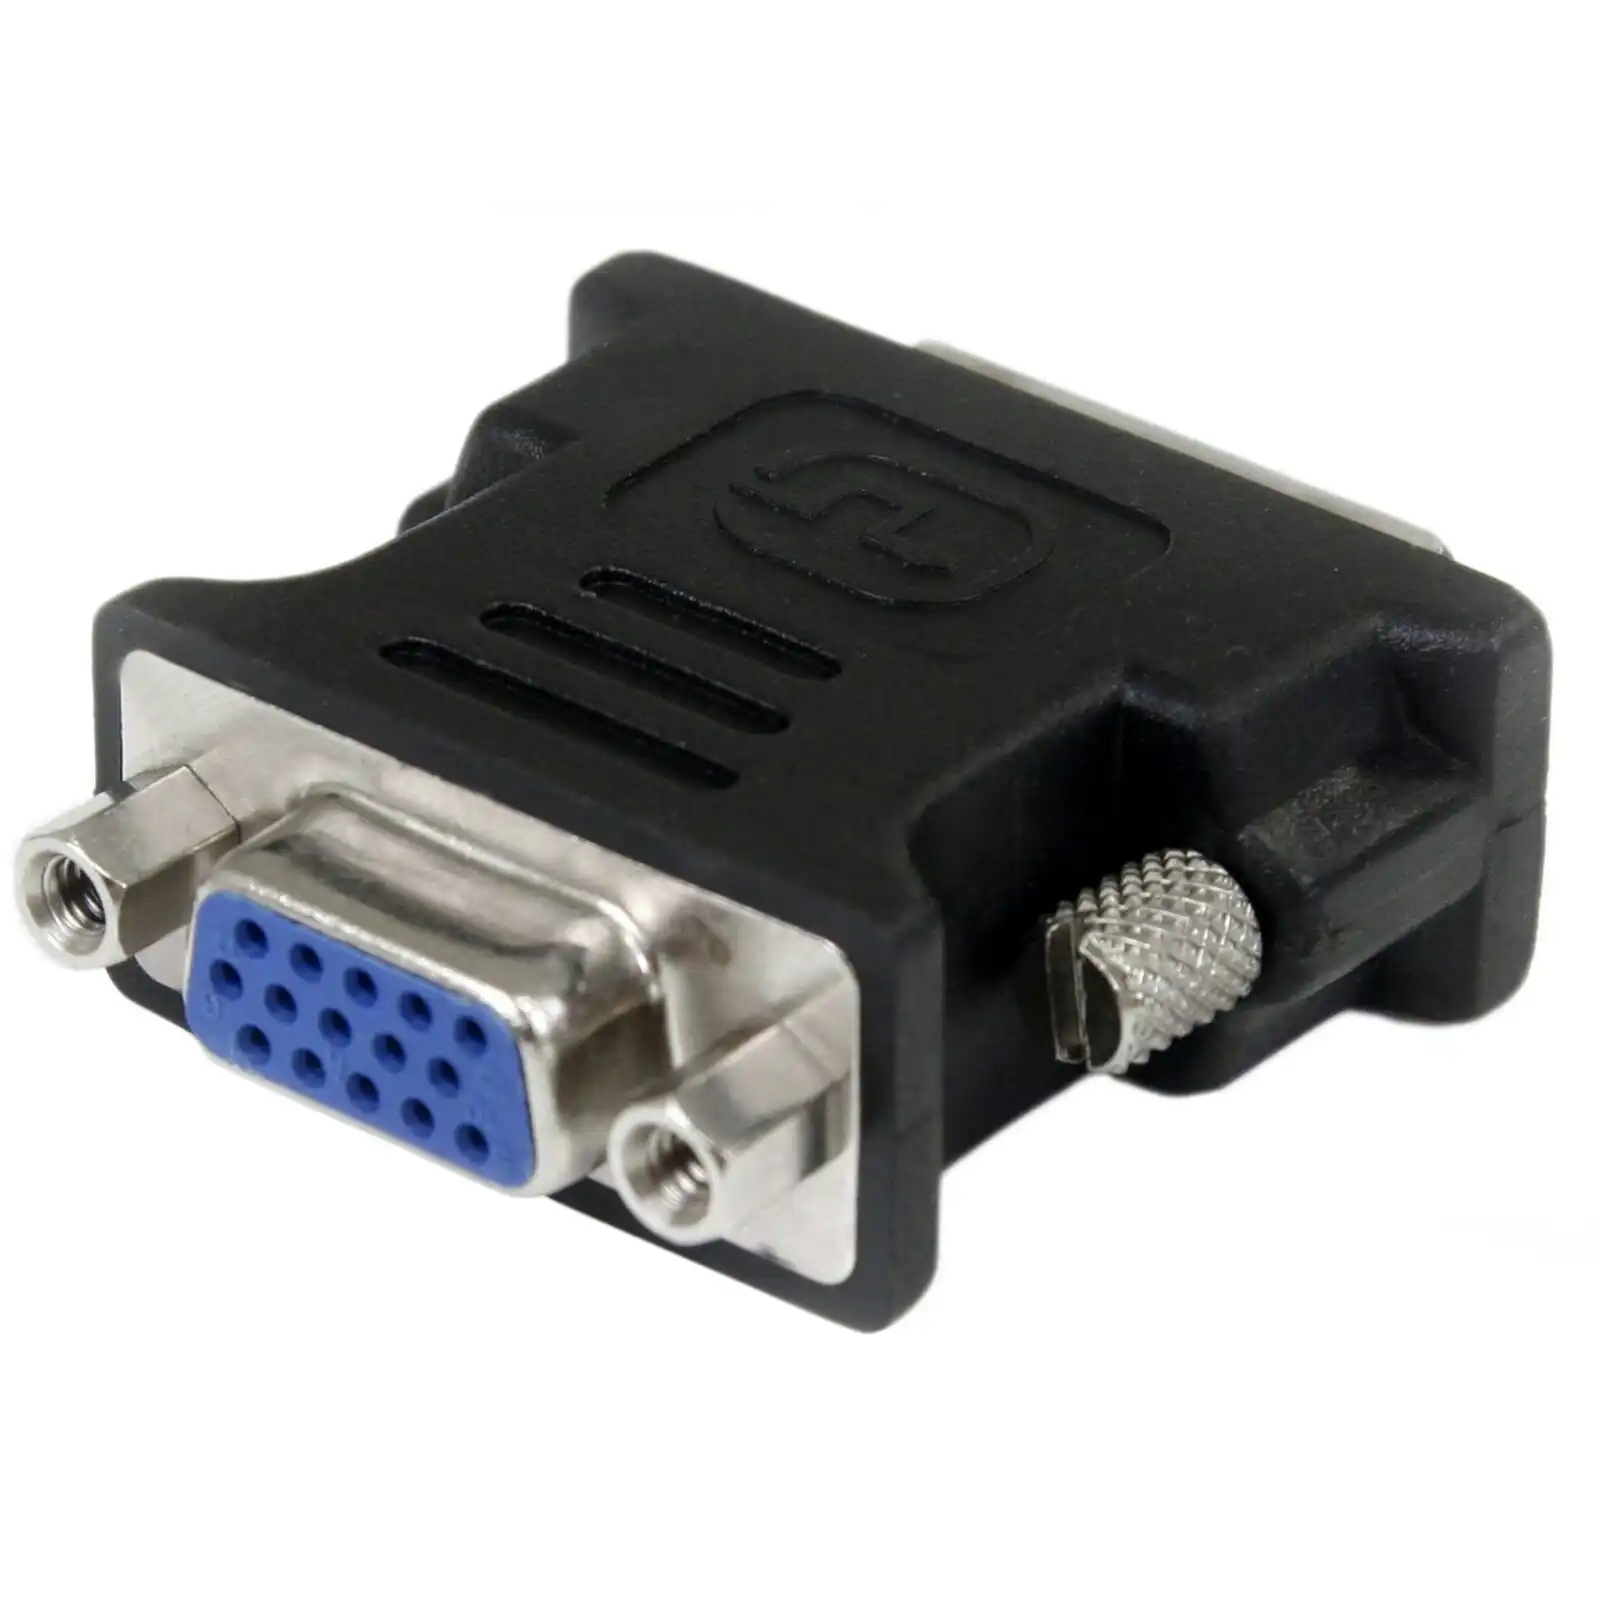 Star Tech DVI Male to VGA Female Cable Adapter/Converter for PC/Monitors/HDTV